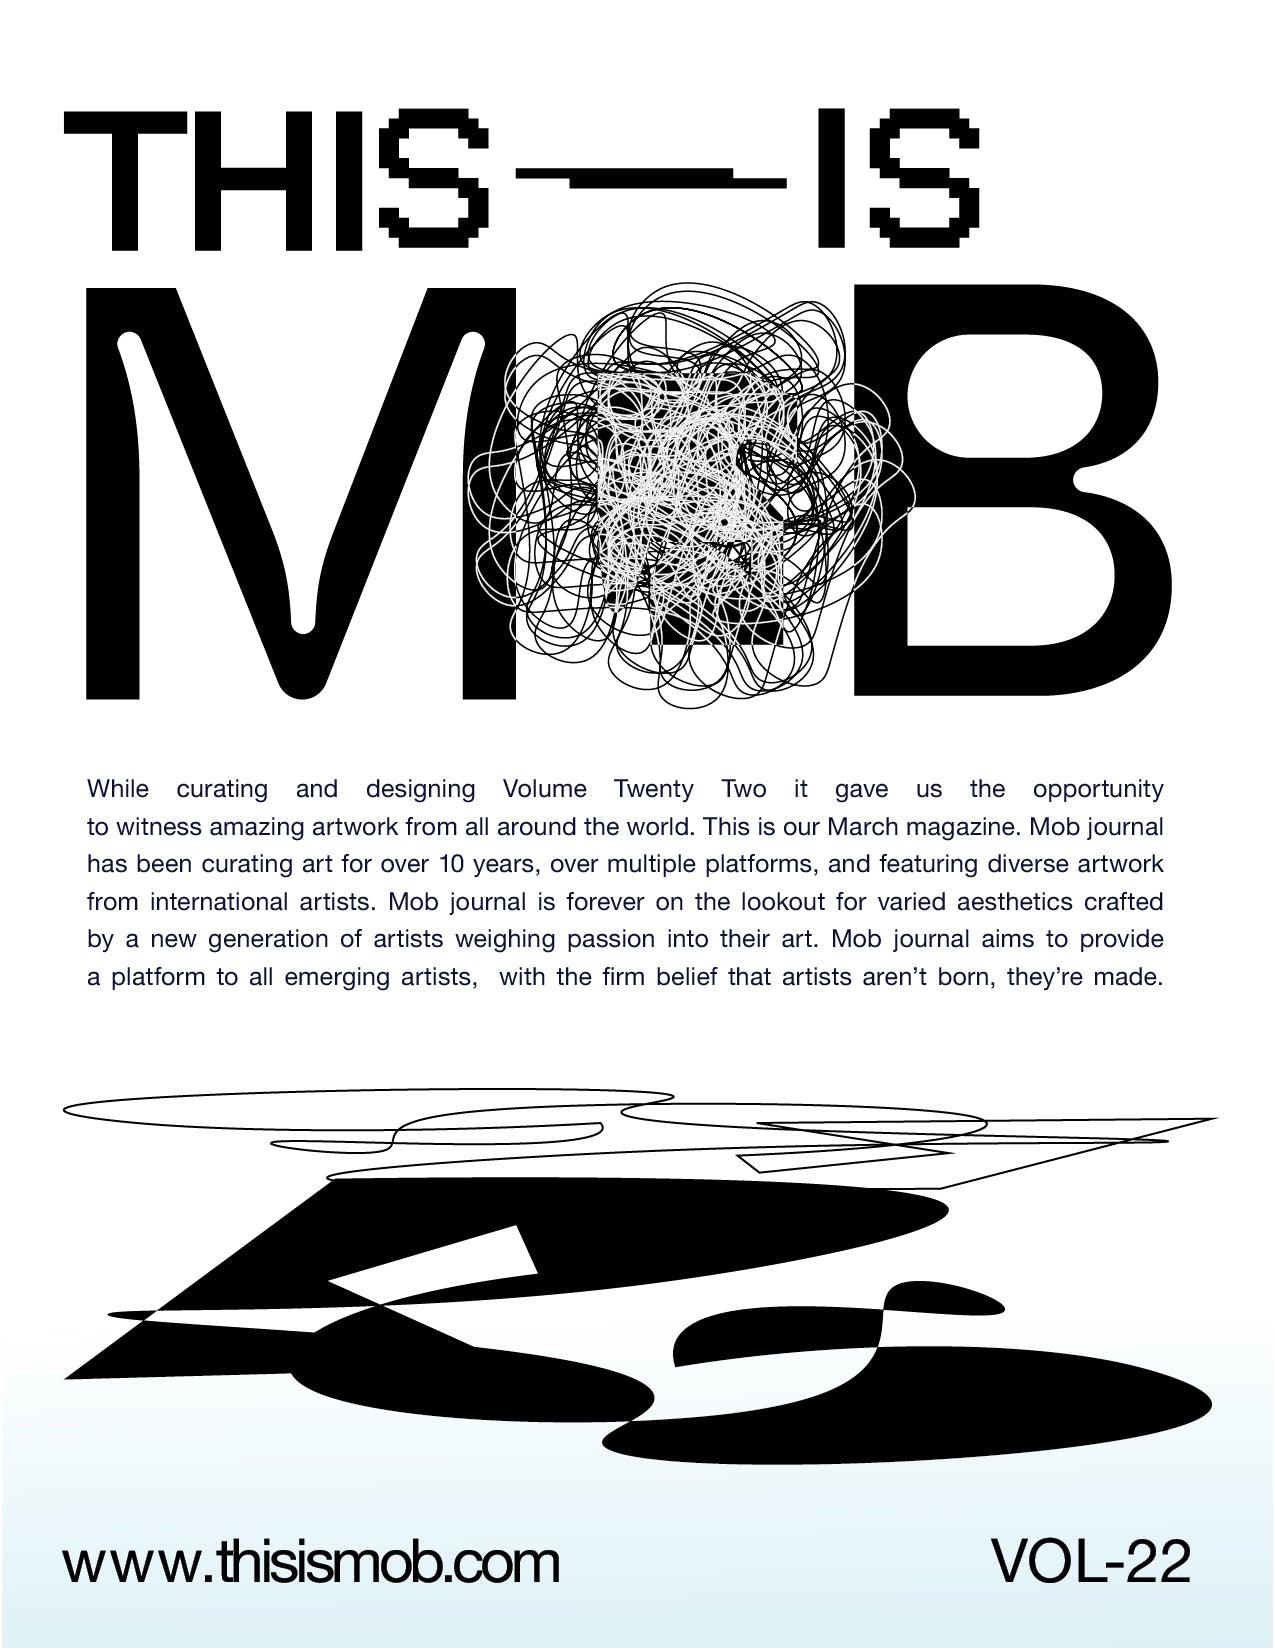 MOB JOURNAL | VOLUME TWENTY TWO | ISSUE #58 - Mob Journal